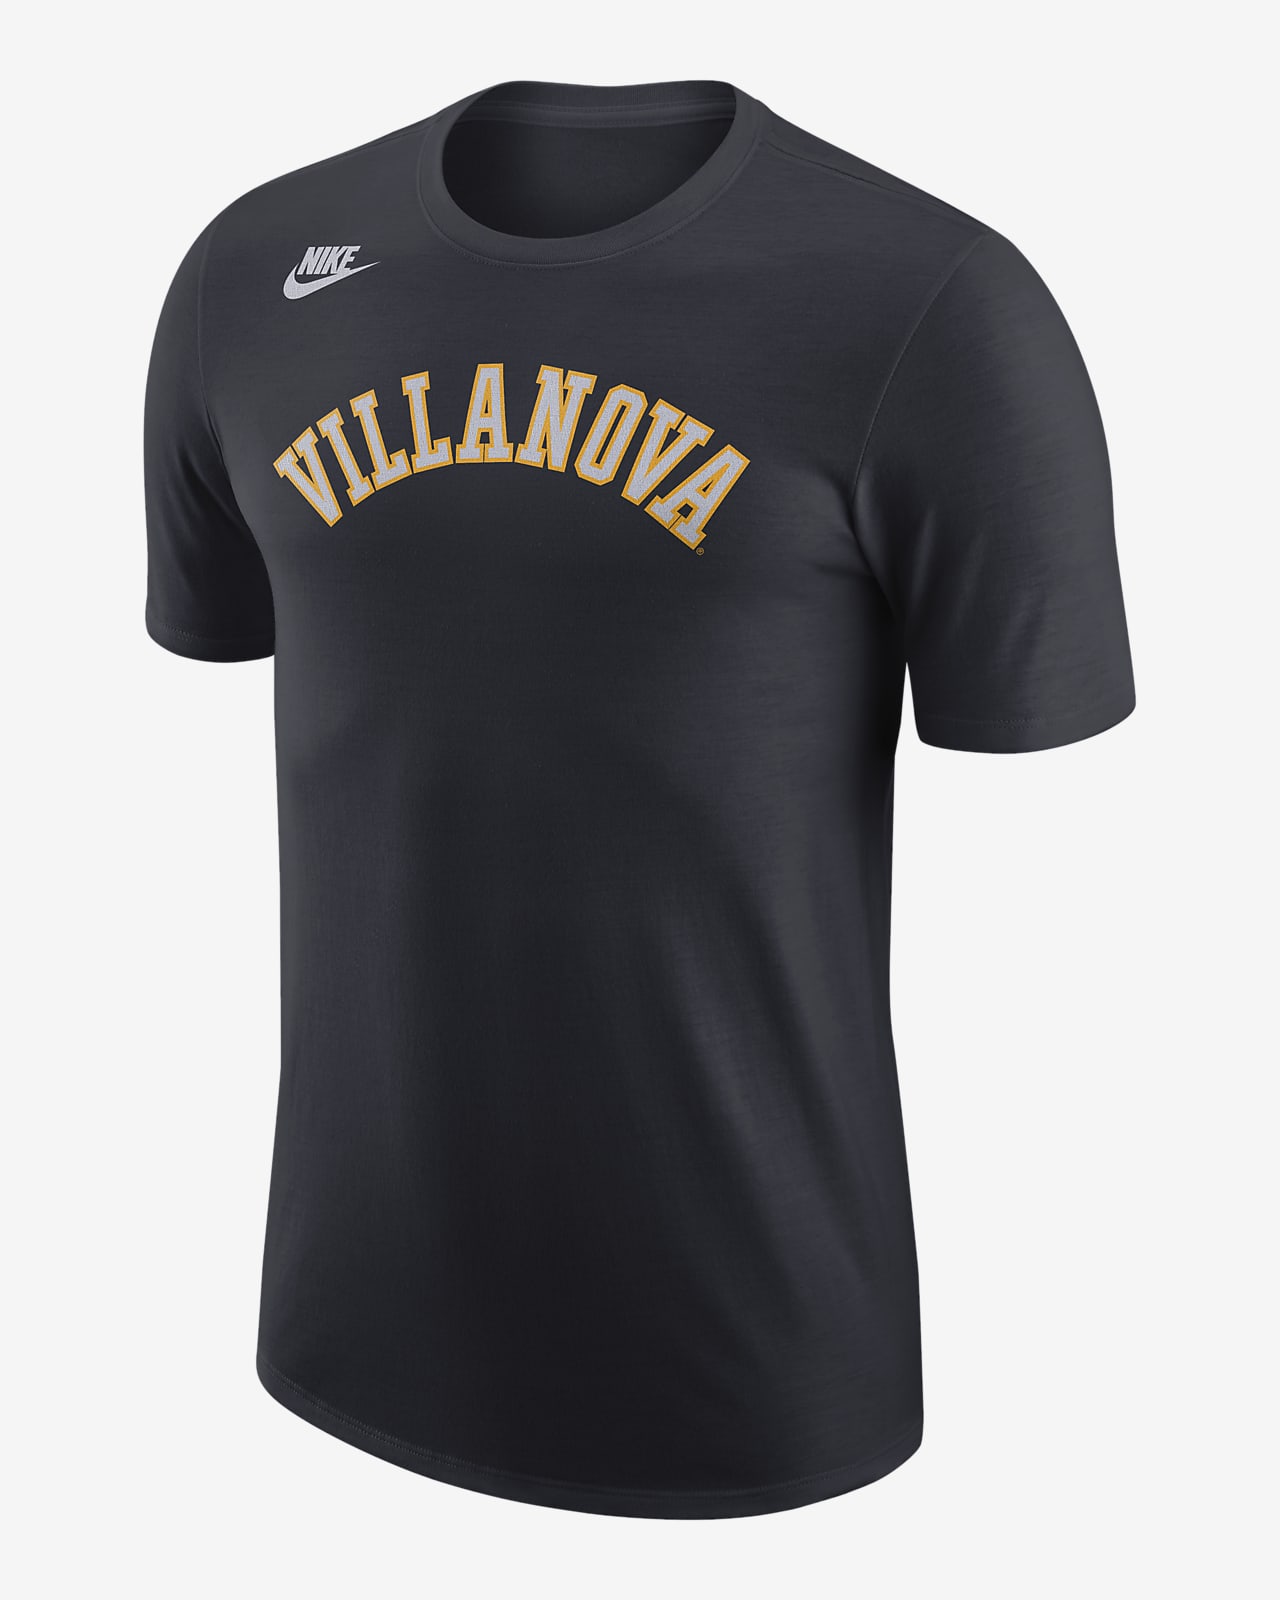 Nike College Retro (Villanova) Men's T 